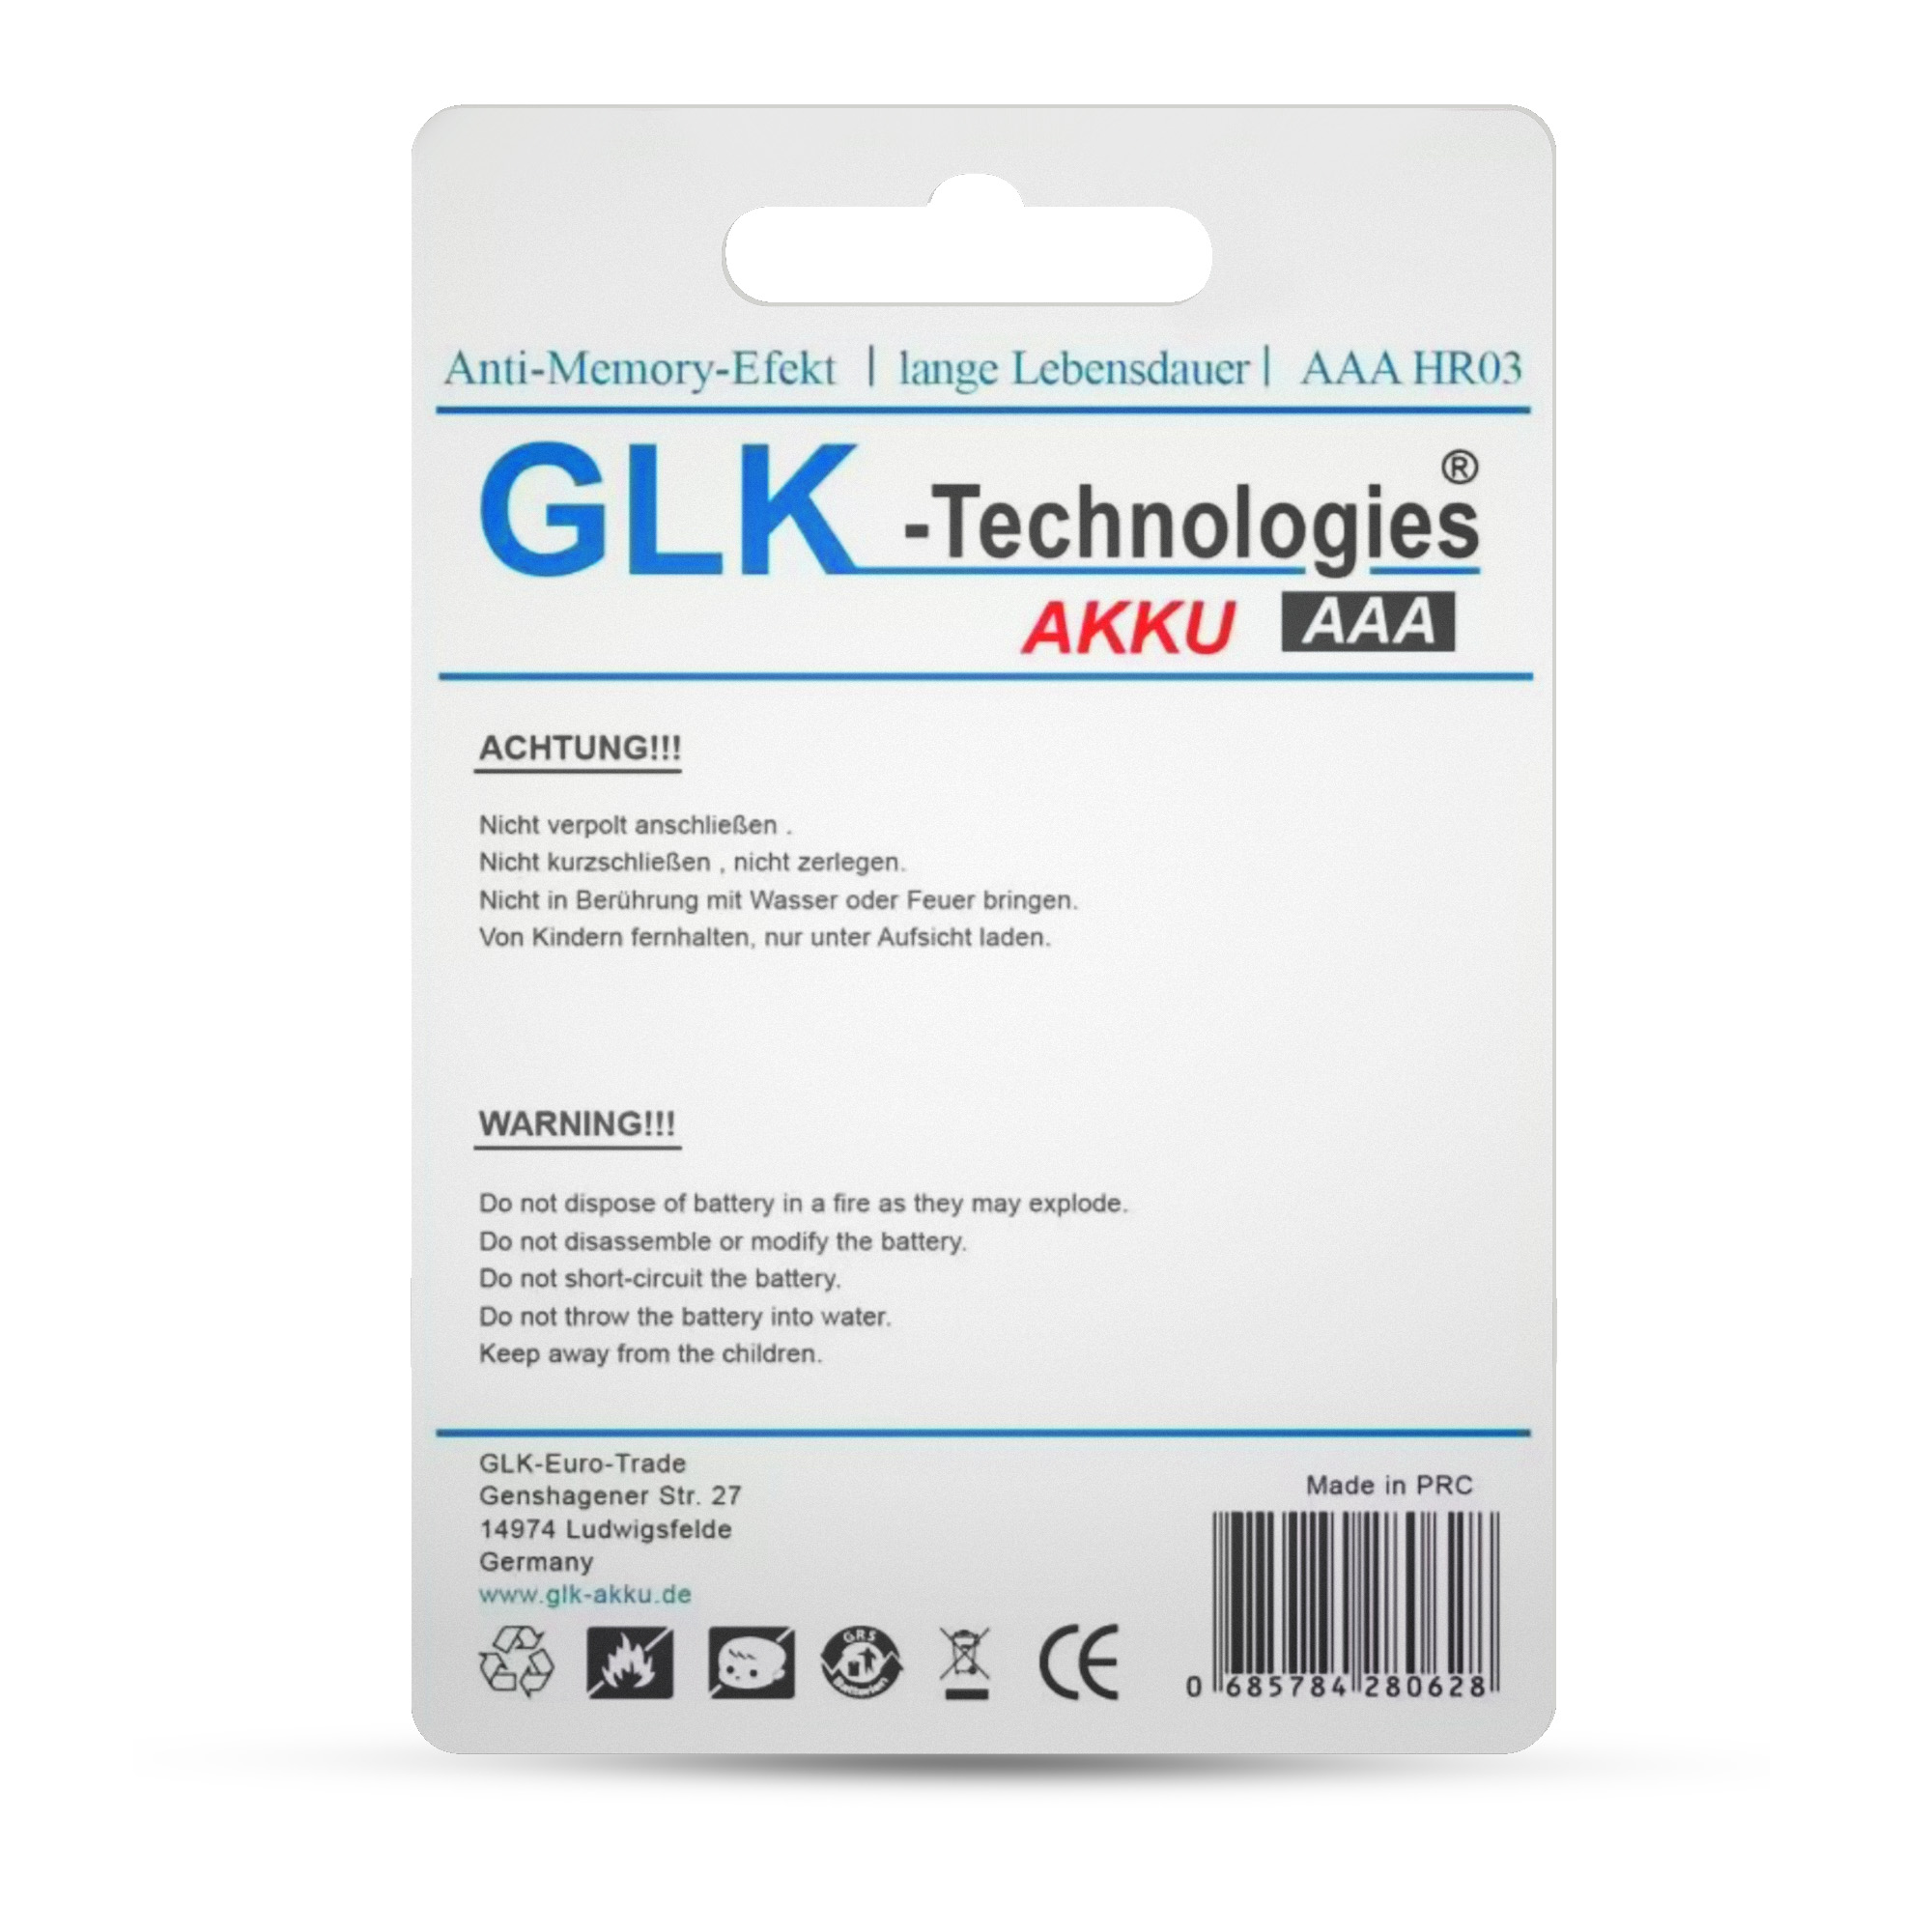 AAA GLK-TECHNOLOGIES 1200mAh Ni-MH HR03 wiederaufladbar Inklusive Ni-MH, Ladegerät Akku, AAA